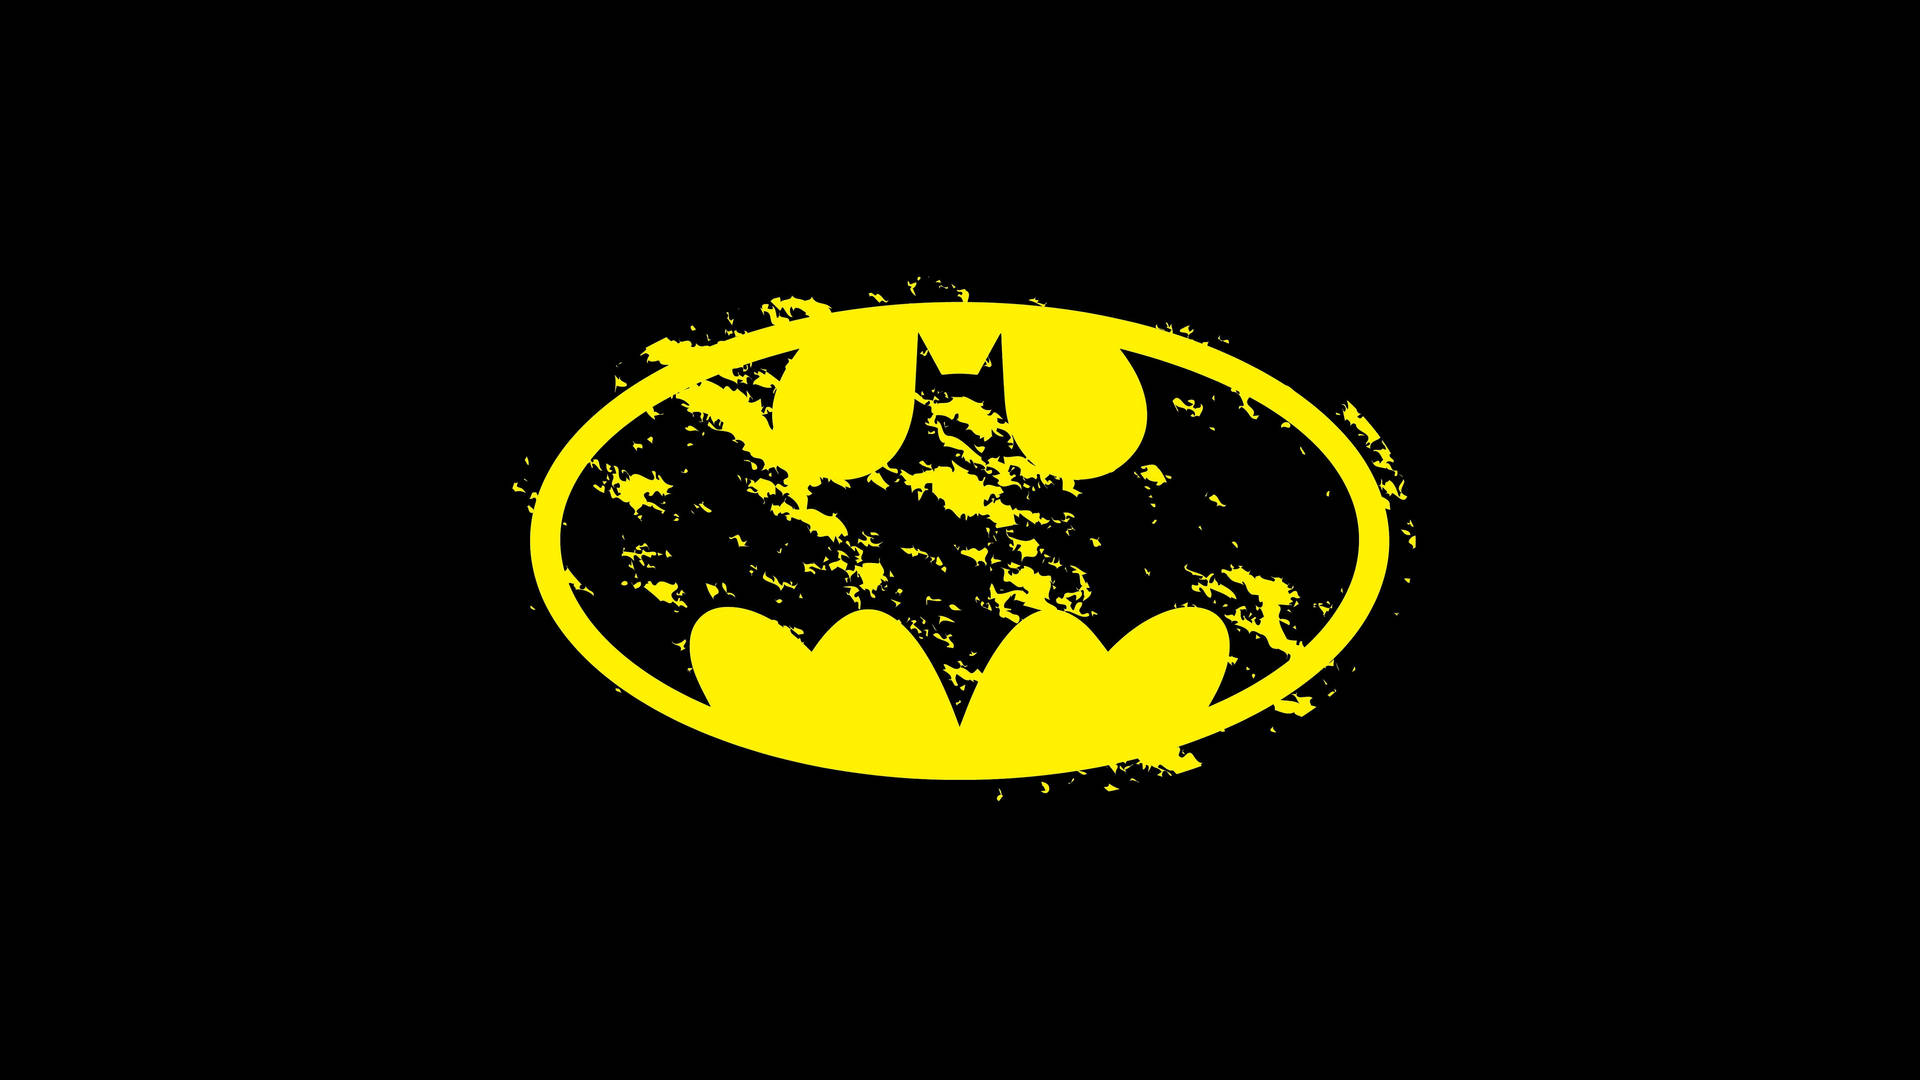 The Dark Knight Rises - Batman Brooding Over Gotham City Wallpaper